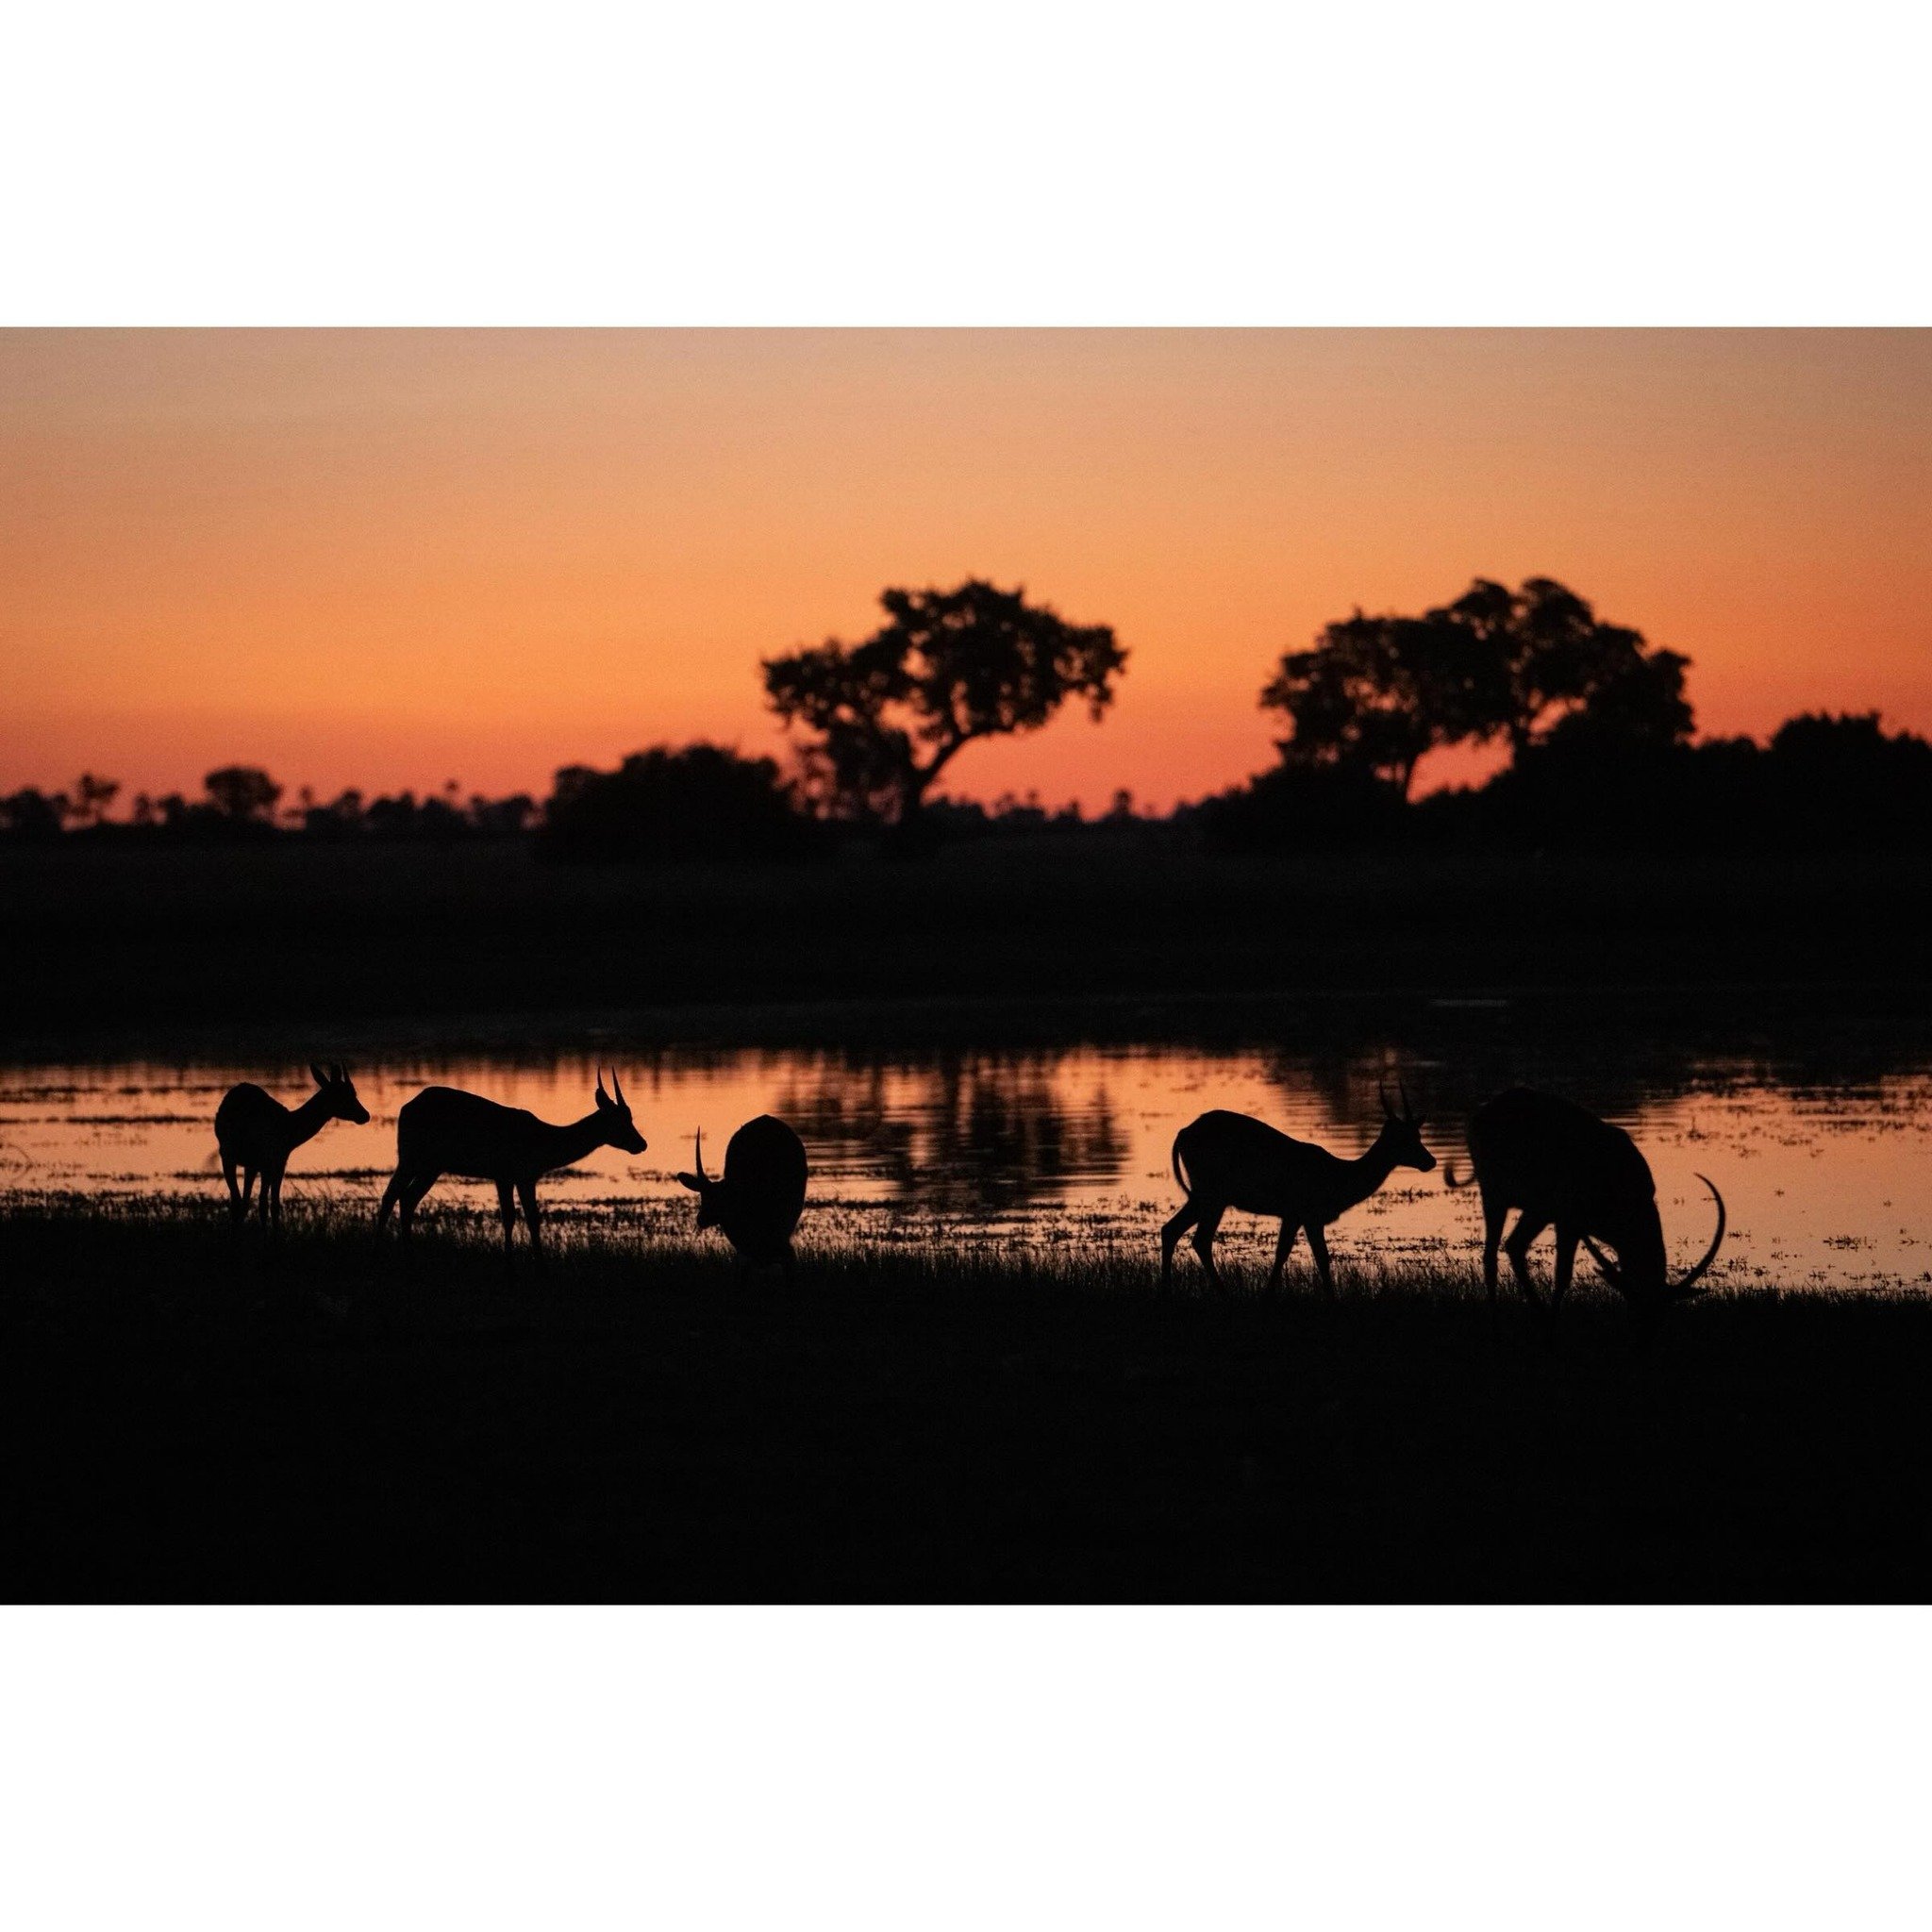 Red lechwe at sunset.

#okavangodelta #africawildlife #wildlife #wildlifephotography #bbcearth #yourshotphotographer @sonyalphafemale @thejaoreserve